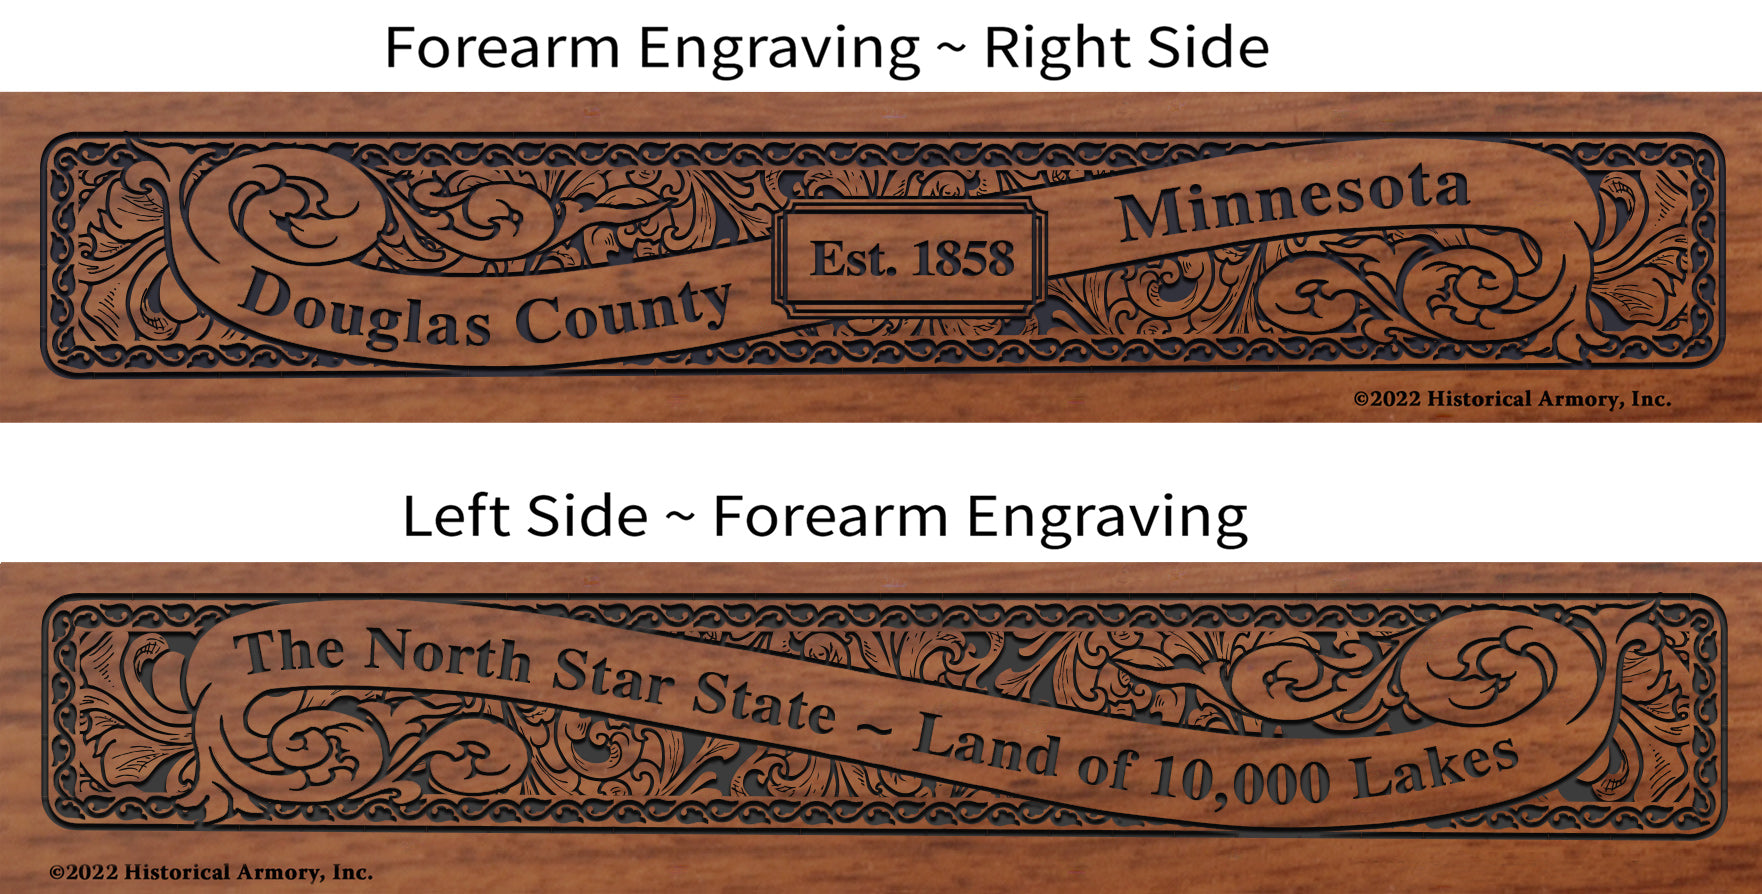 Douglas County Minnesota Engraved Rifle Forearm